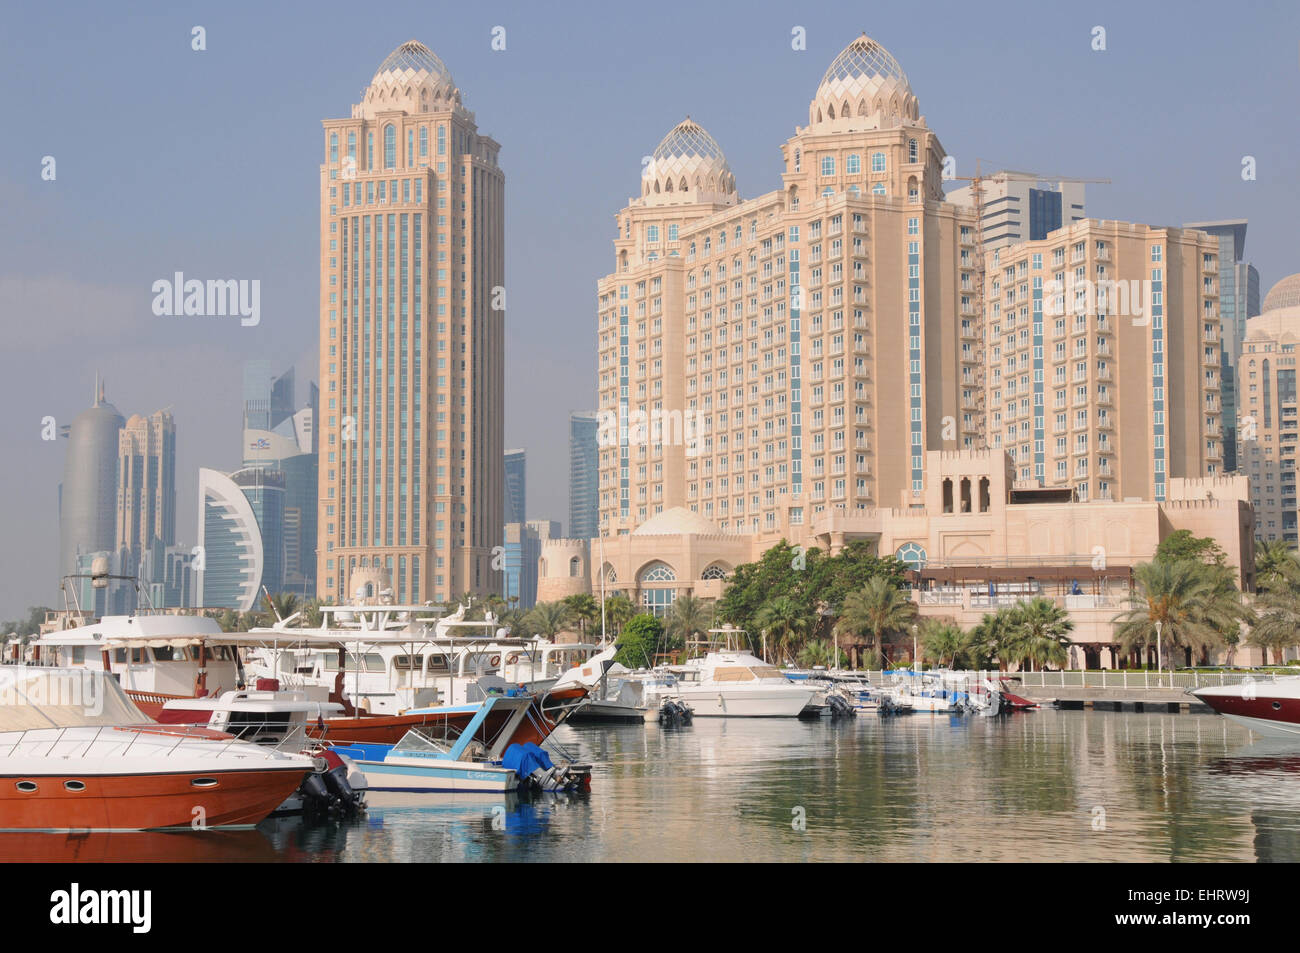 Four Seasons Hotel and Marina, West Bay, Doha, Qatar. Middle East. Qatar Hotels. Stock Photo